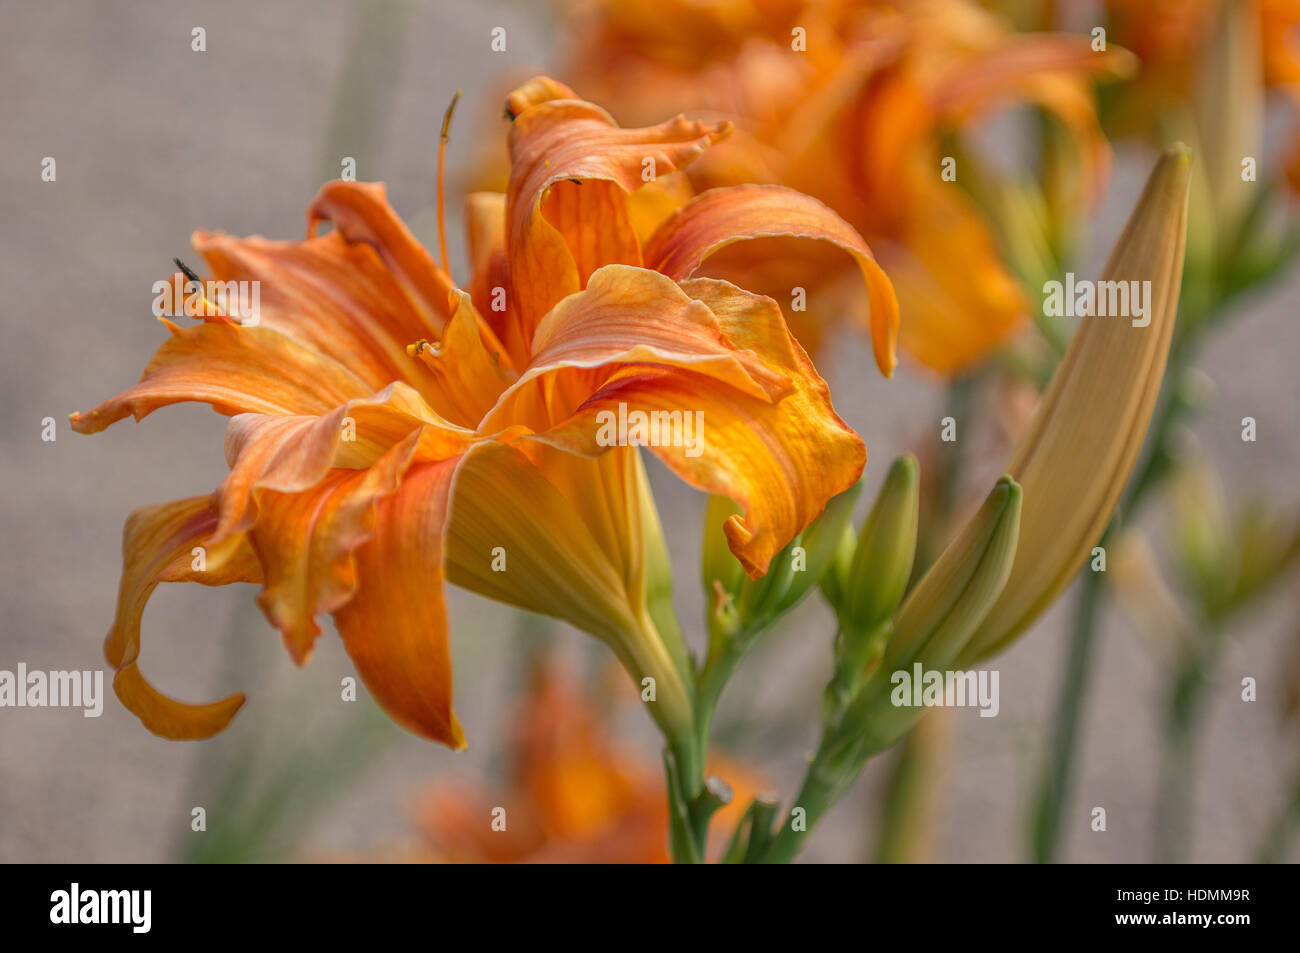 Orange multi-lobed lily flowers close up Hemerocallis Stock Photo